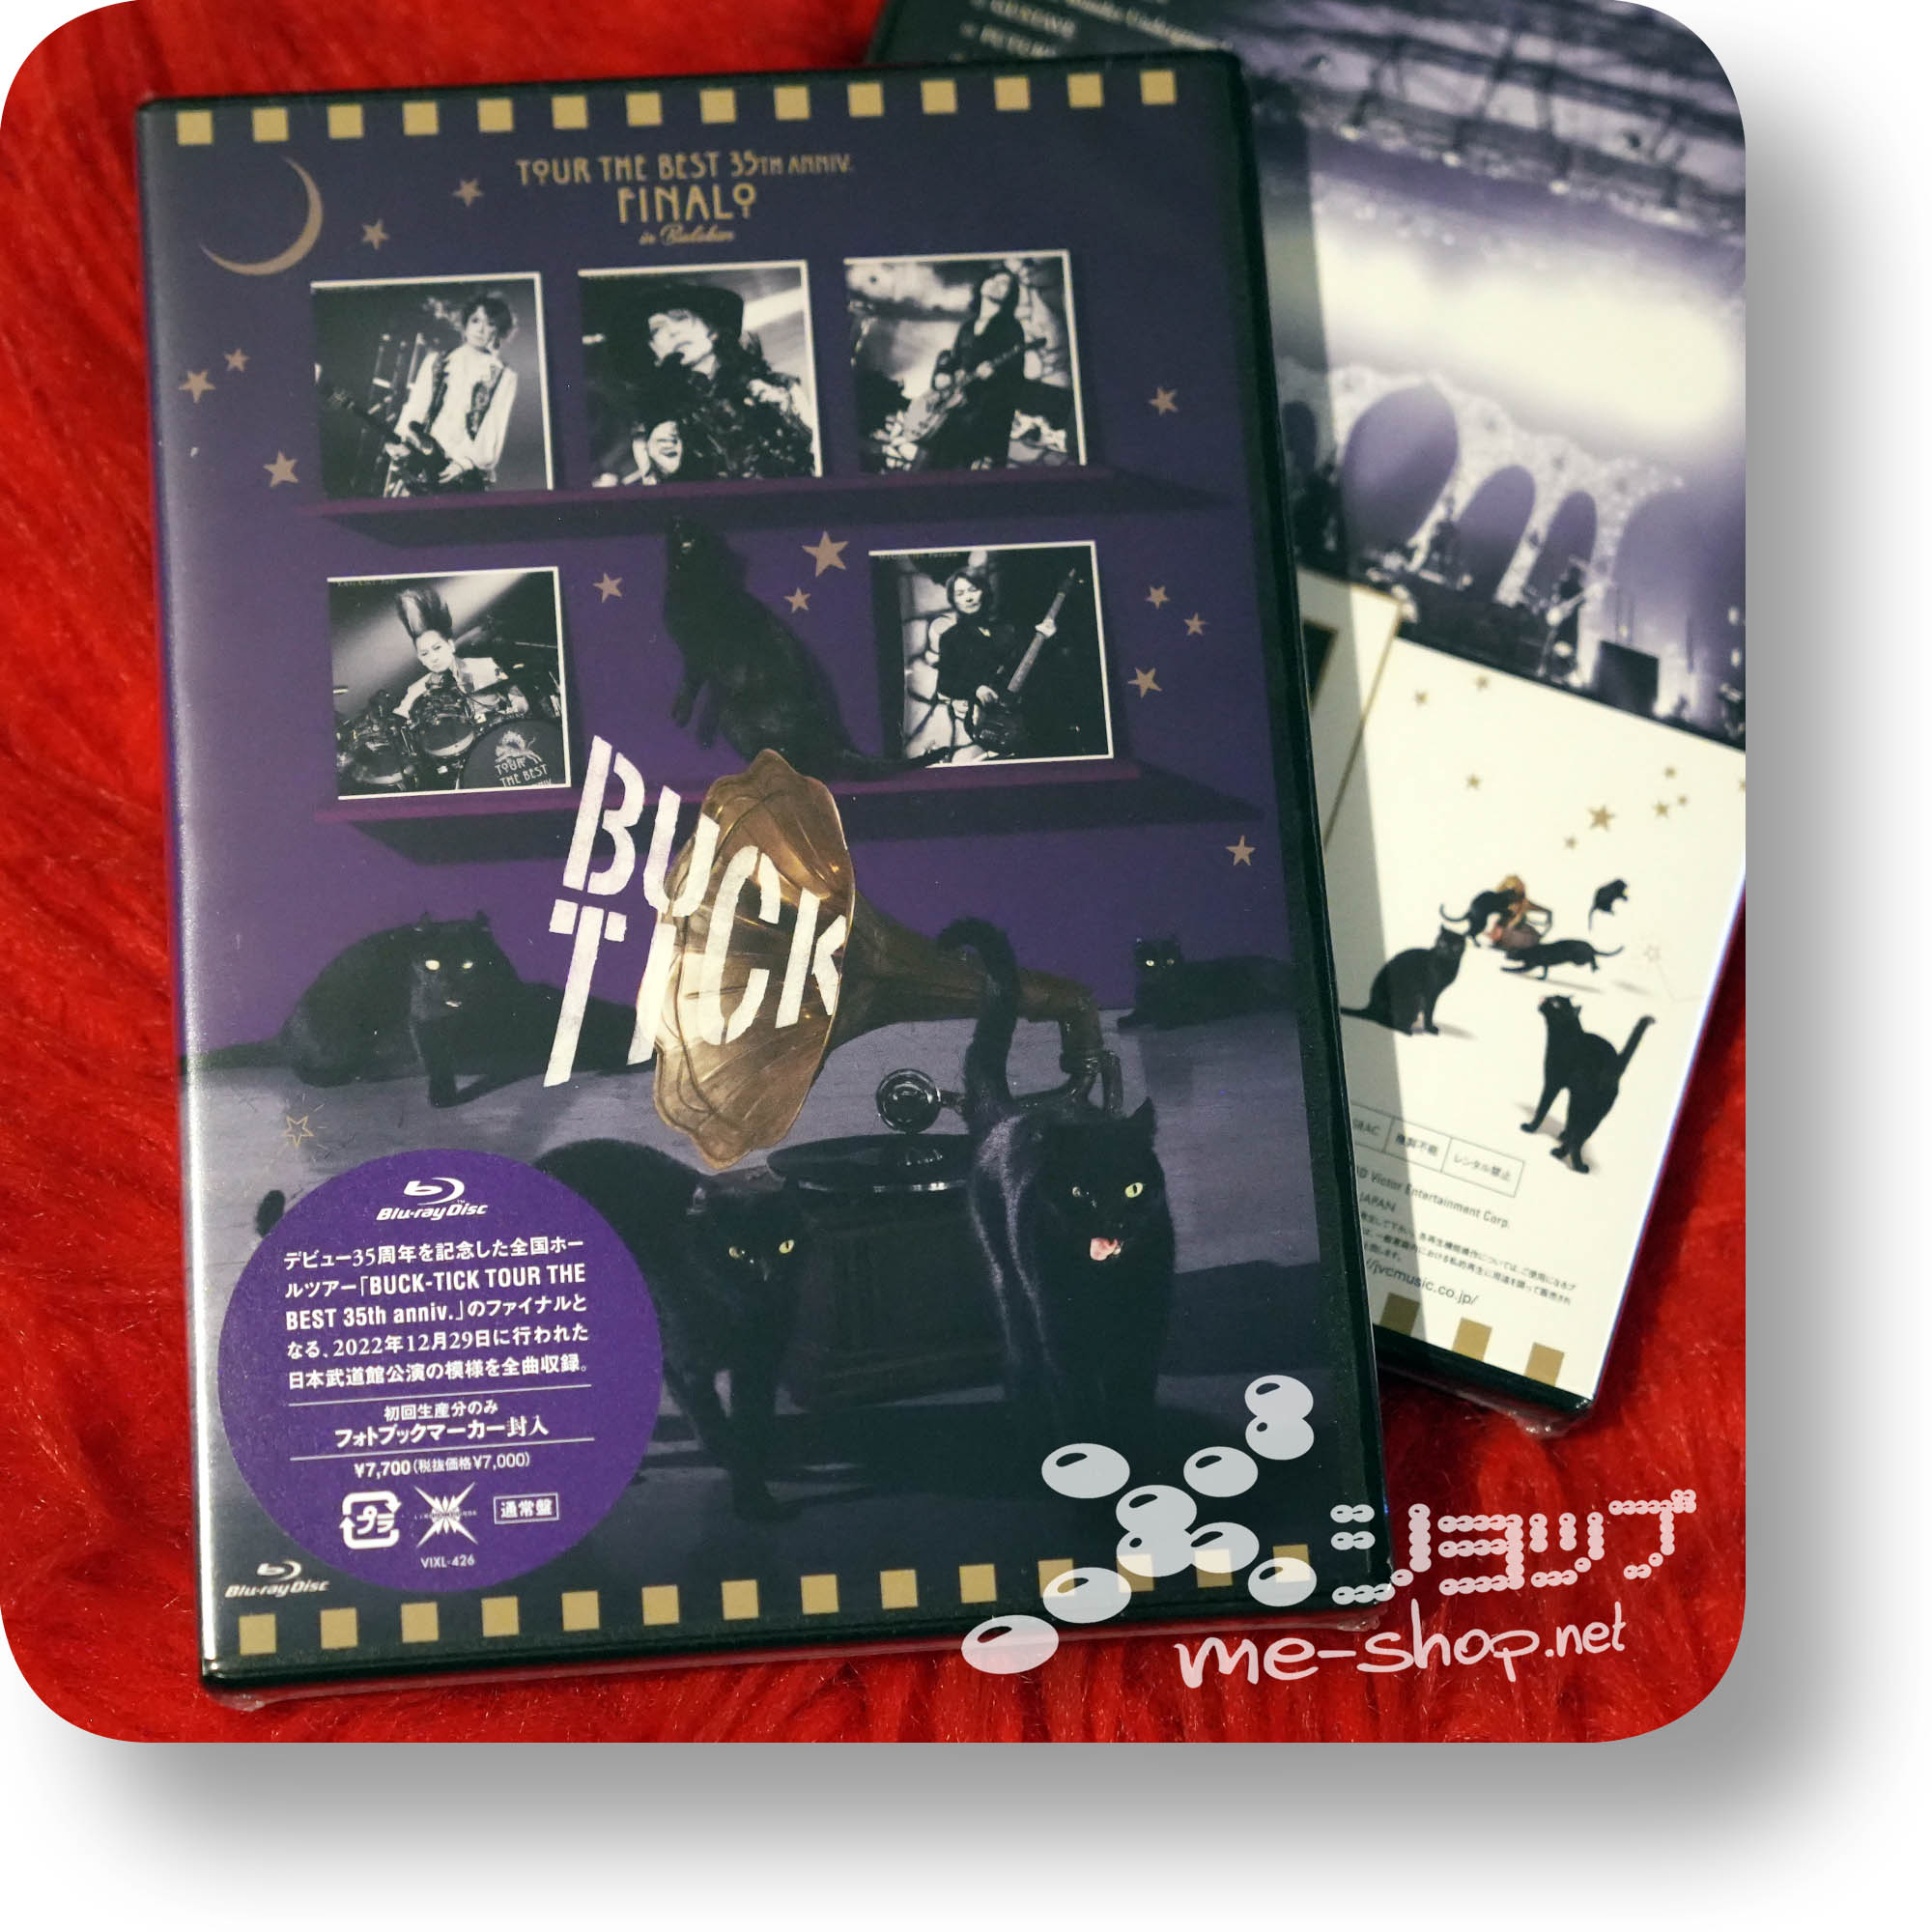 BUCK-TICK - TOUR THE BEST 35th anniv. FINALO in Budokan (Blu-ray)